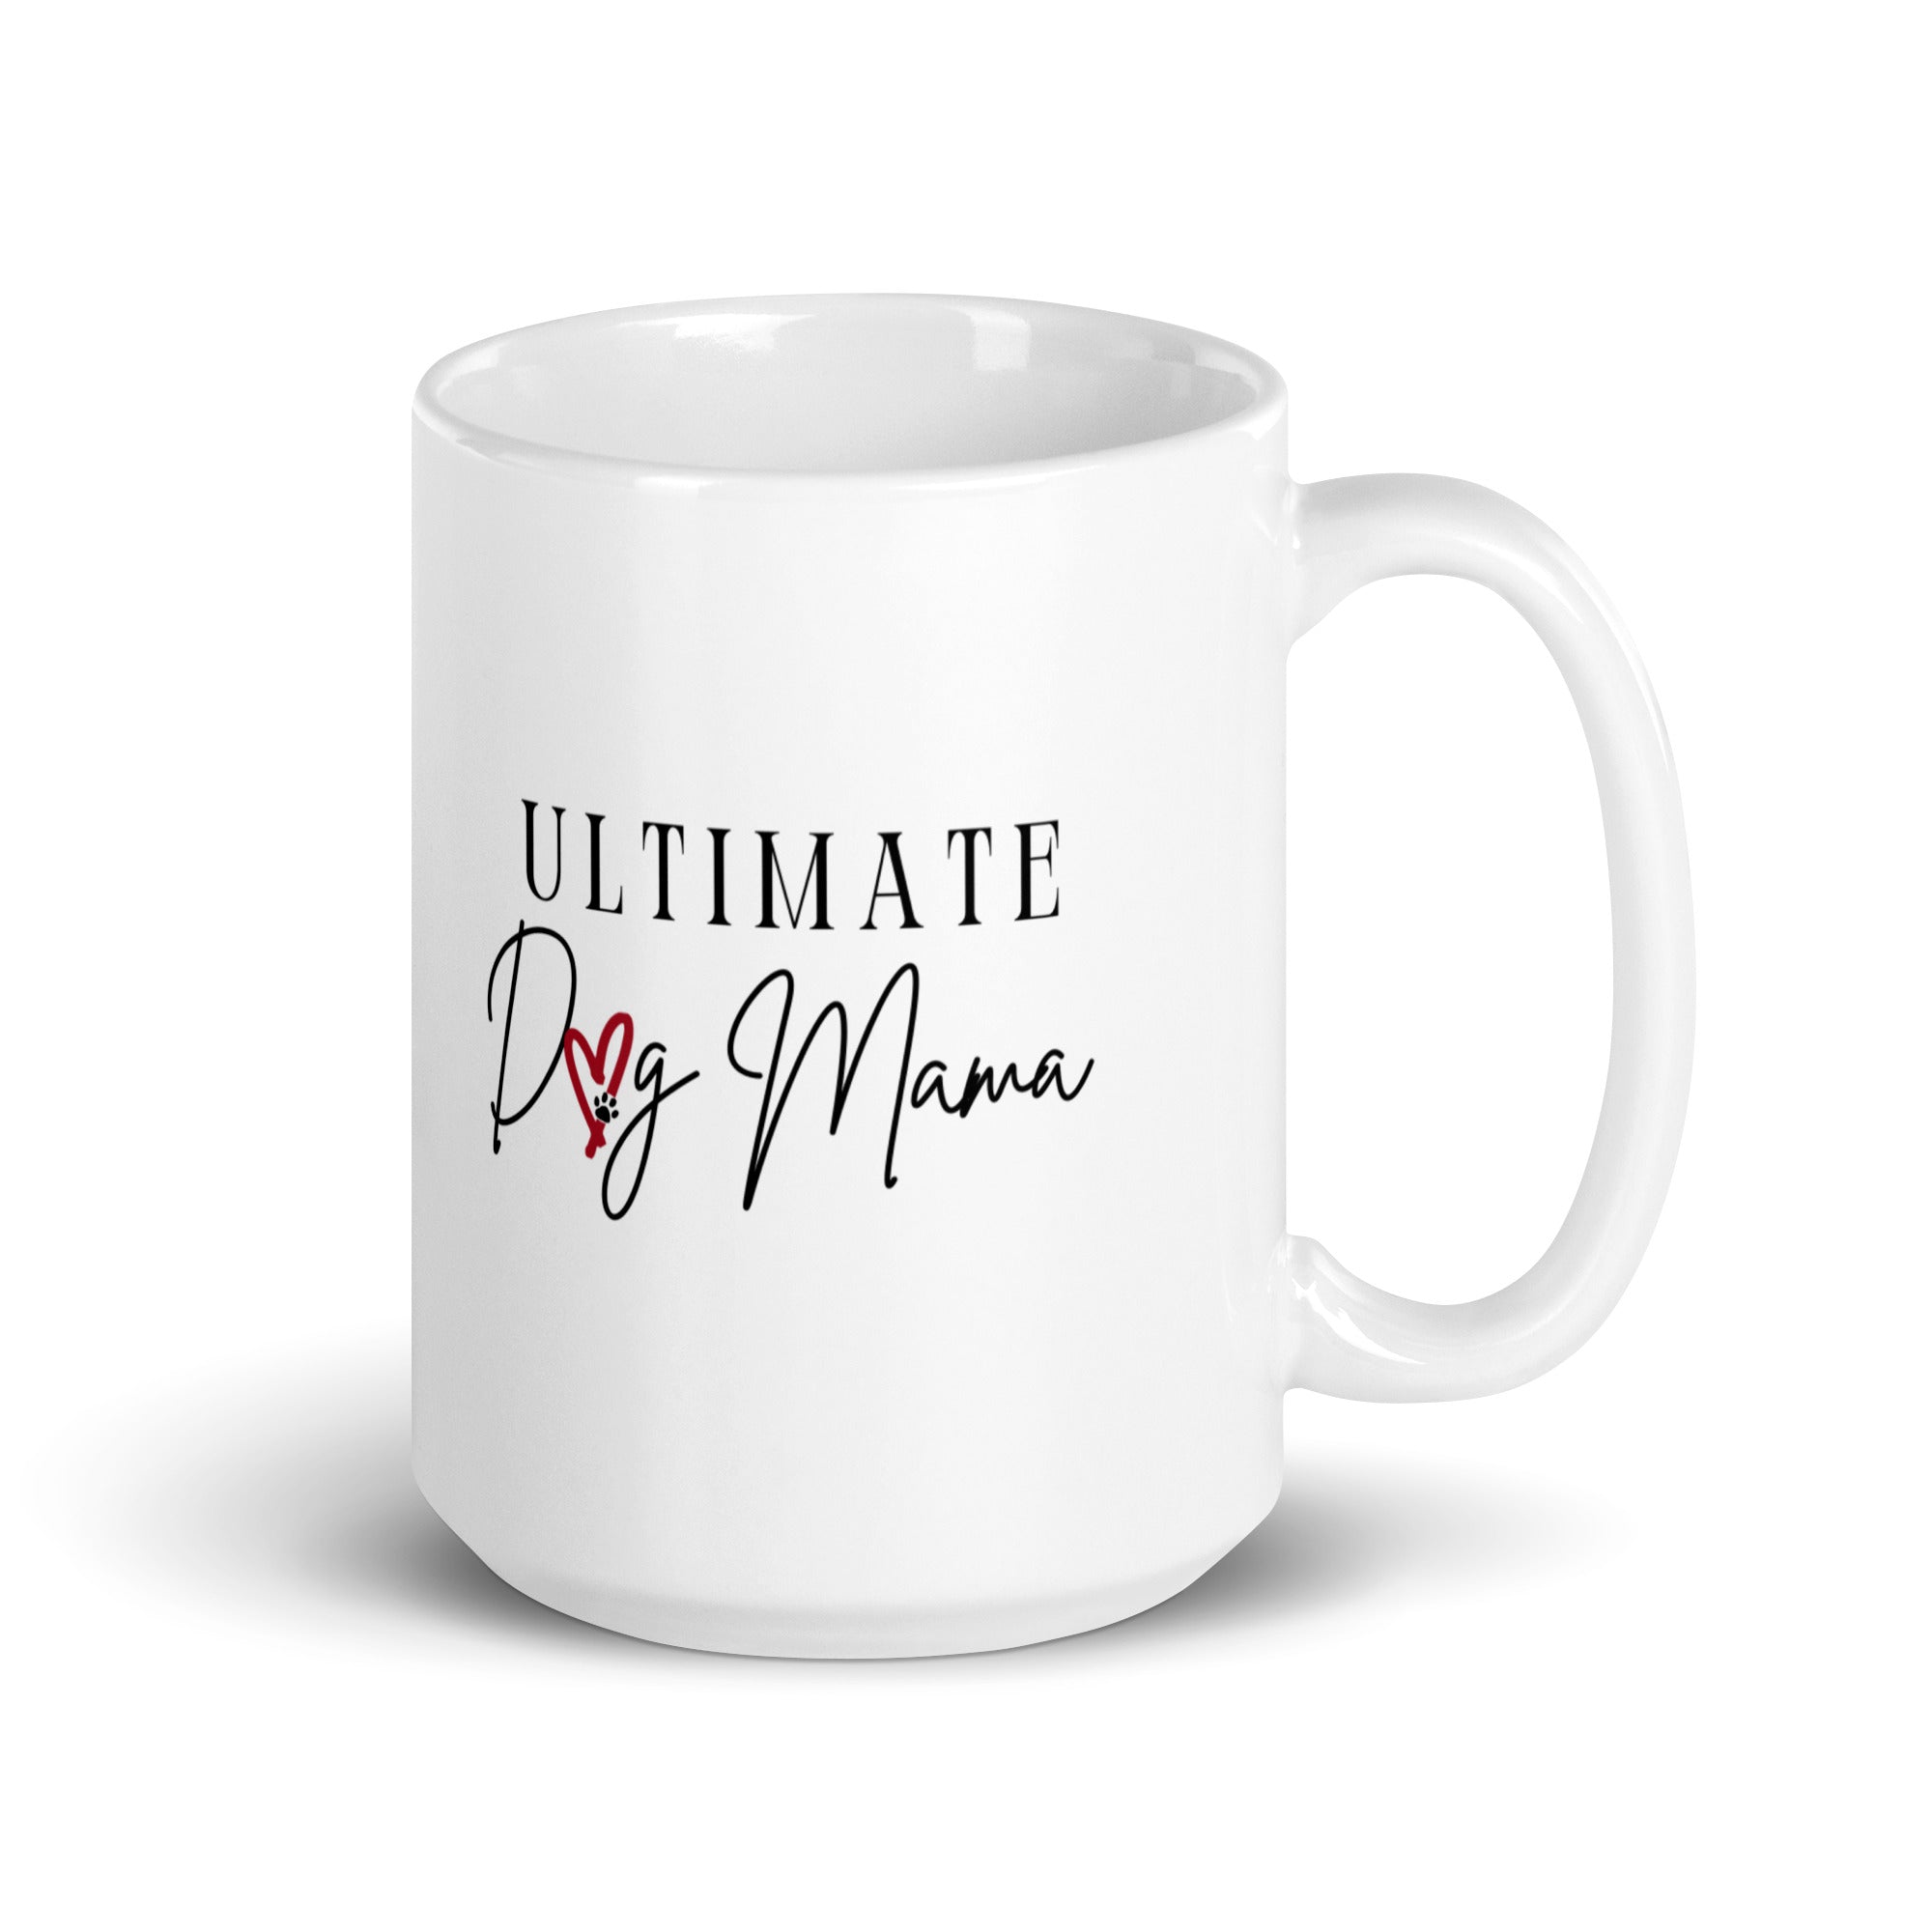 Ultimate Dog Mama White Ceramic Coffee Mug - ultimate-dog-mama-white-ceramic-coffee-mug